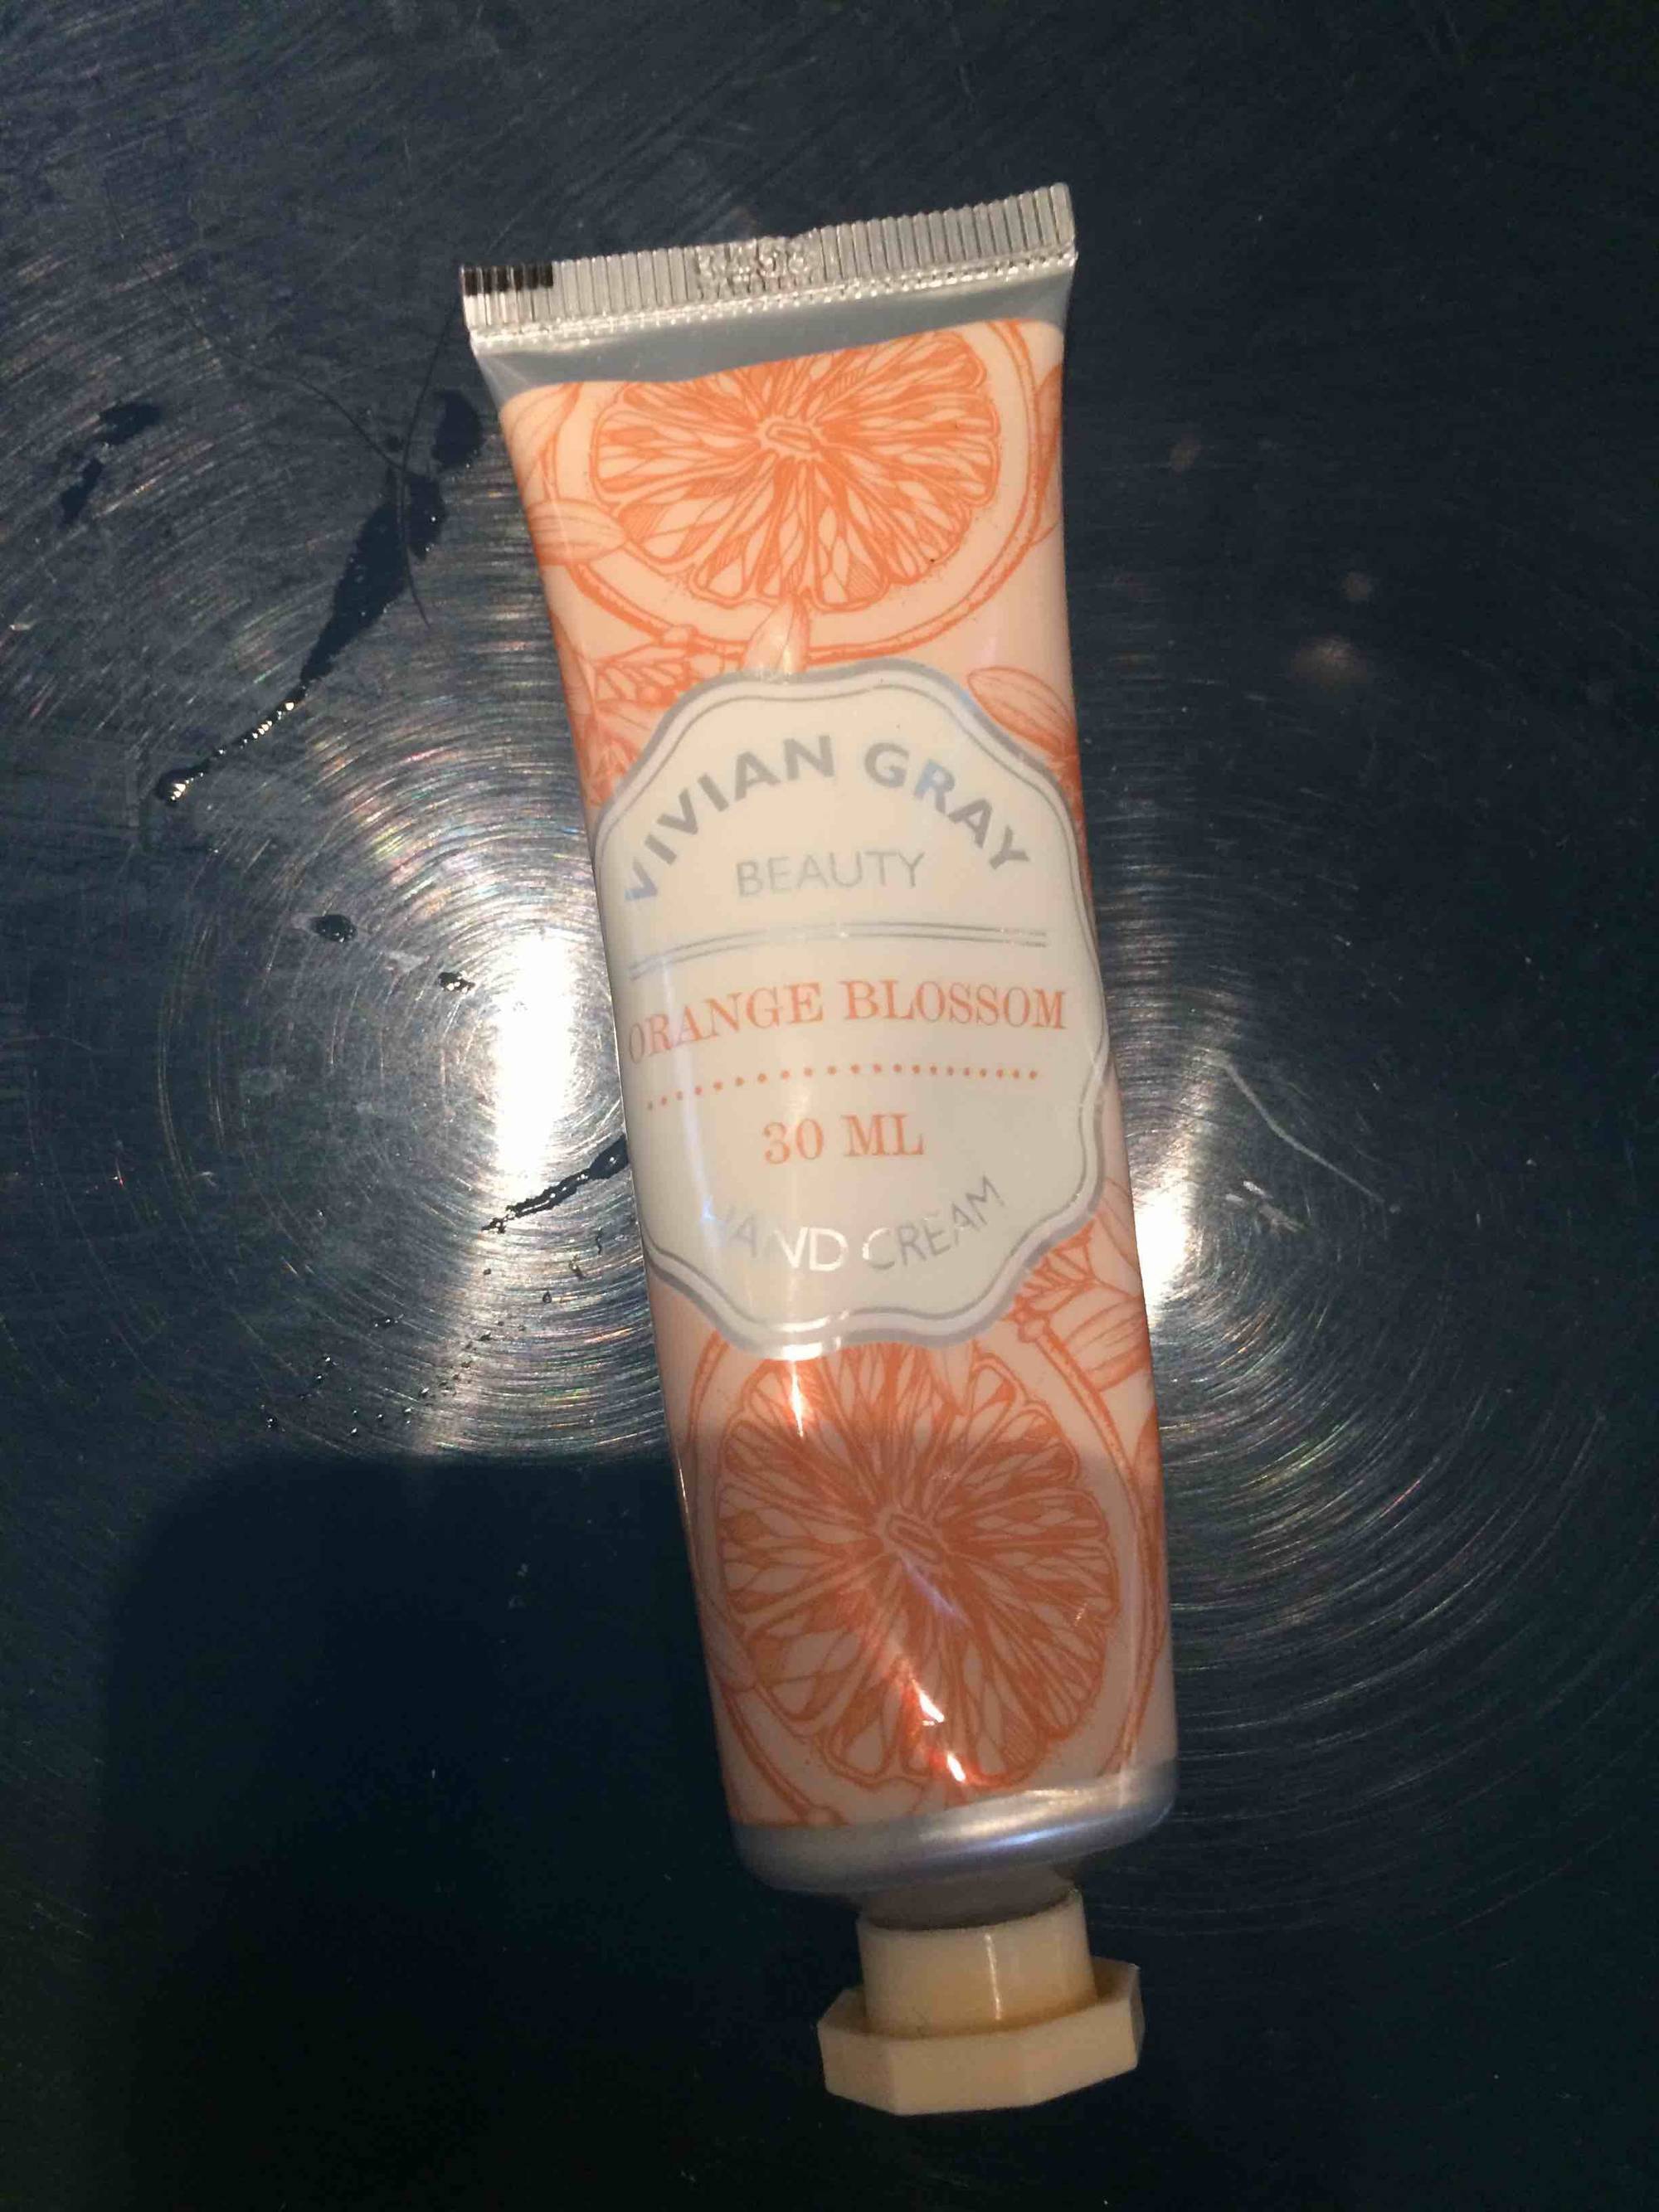 VIVIAN GRAY - Orange blossom - Hand cream